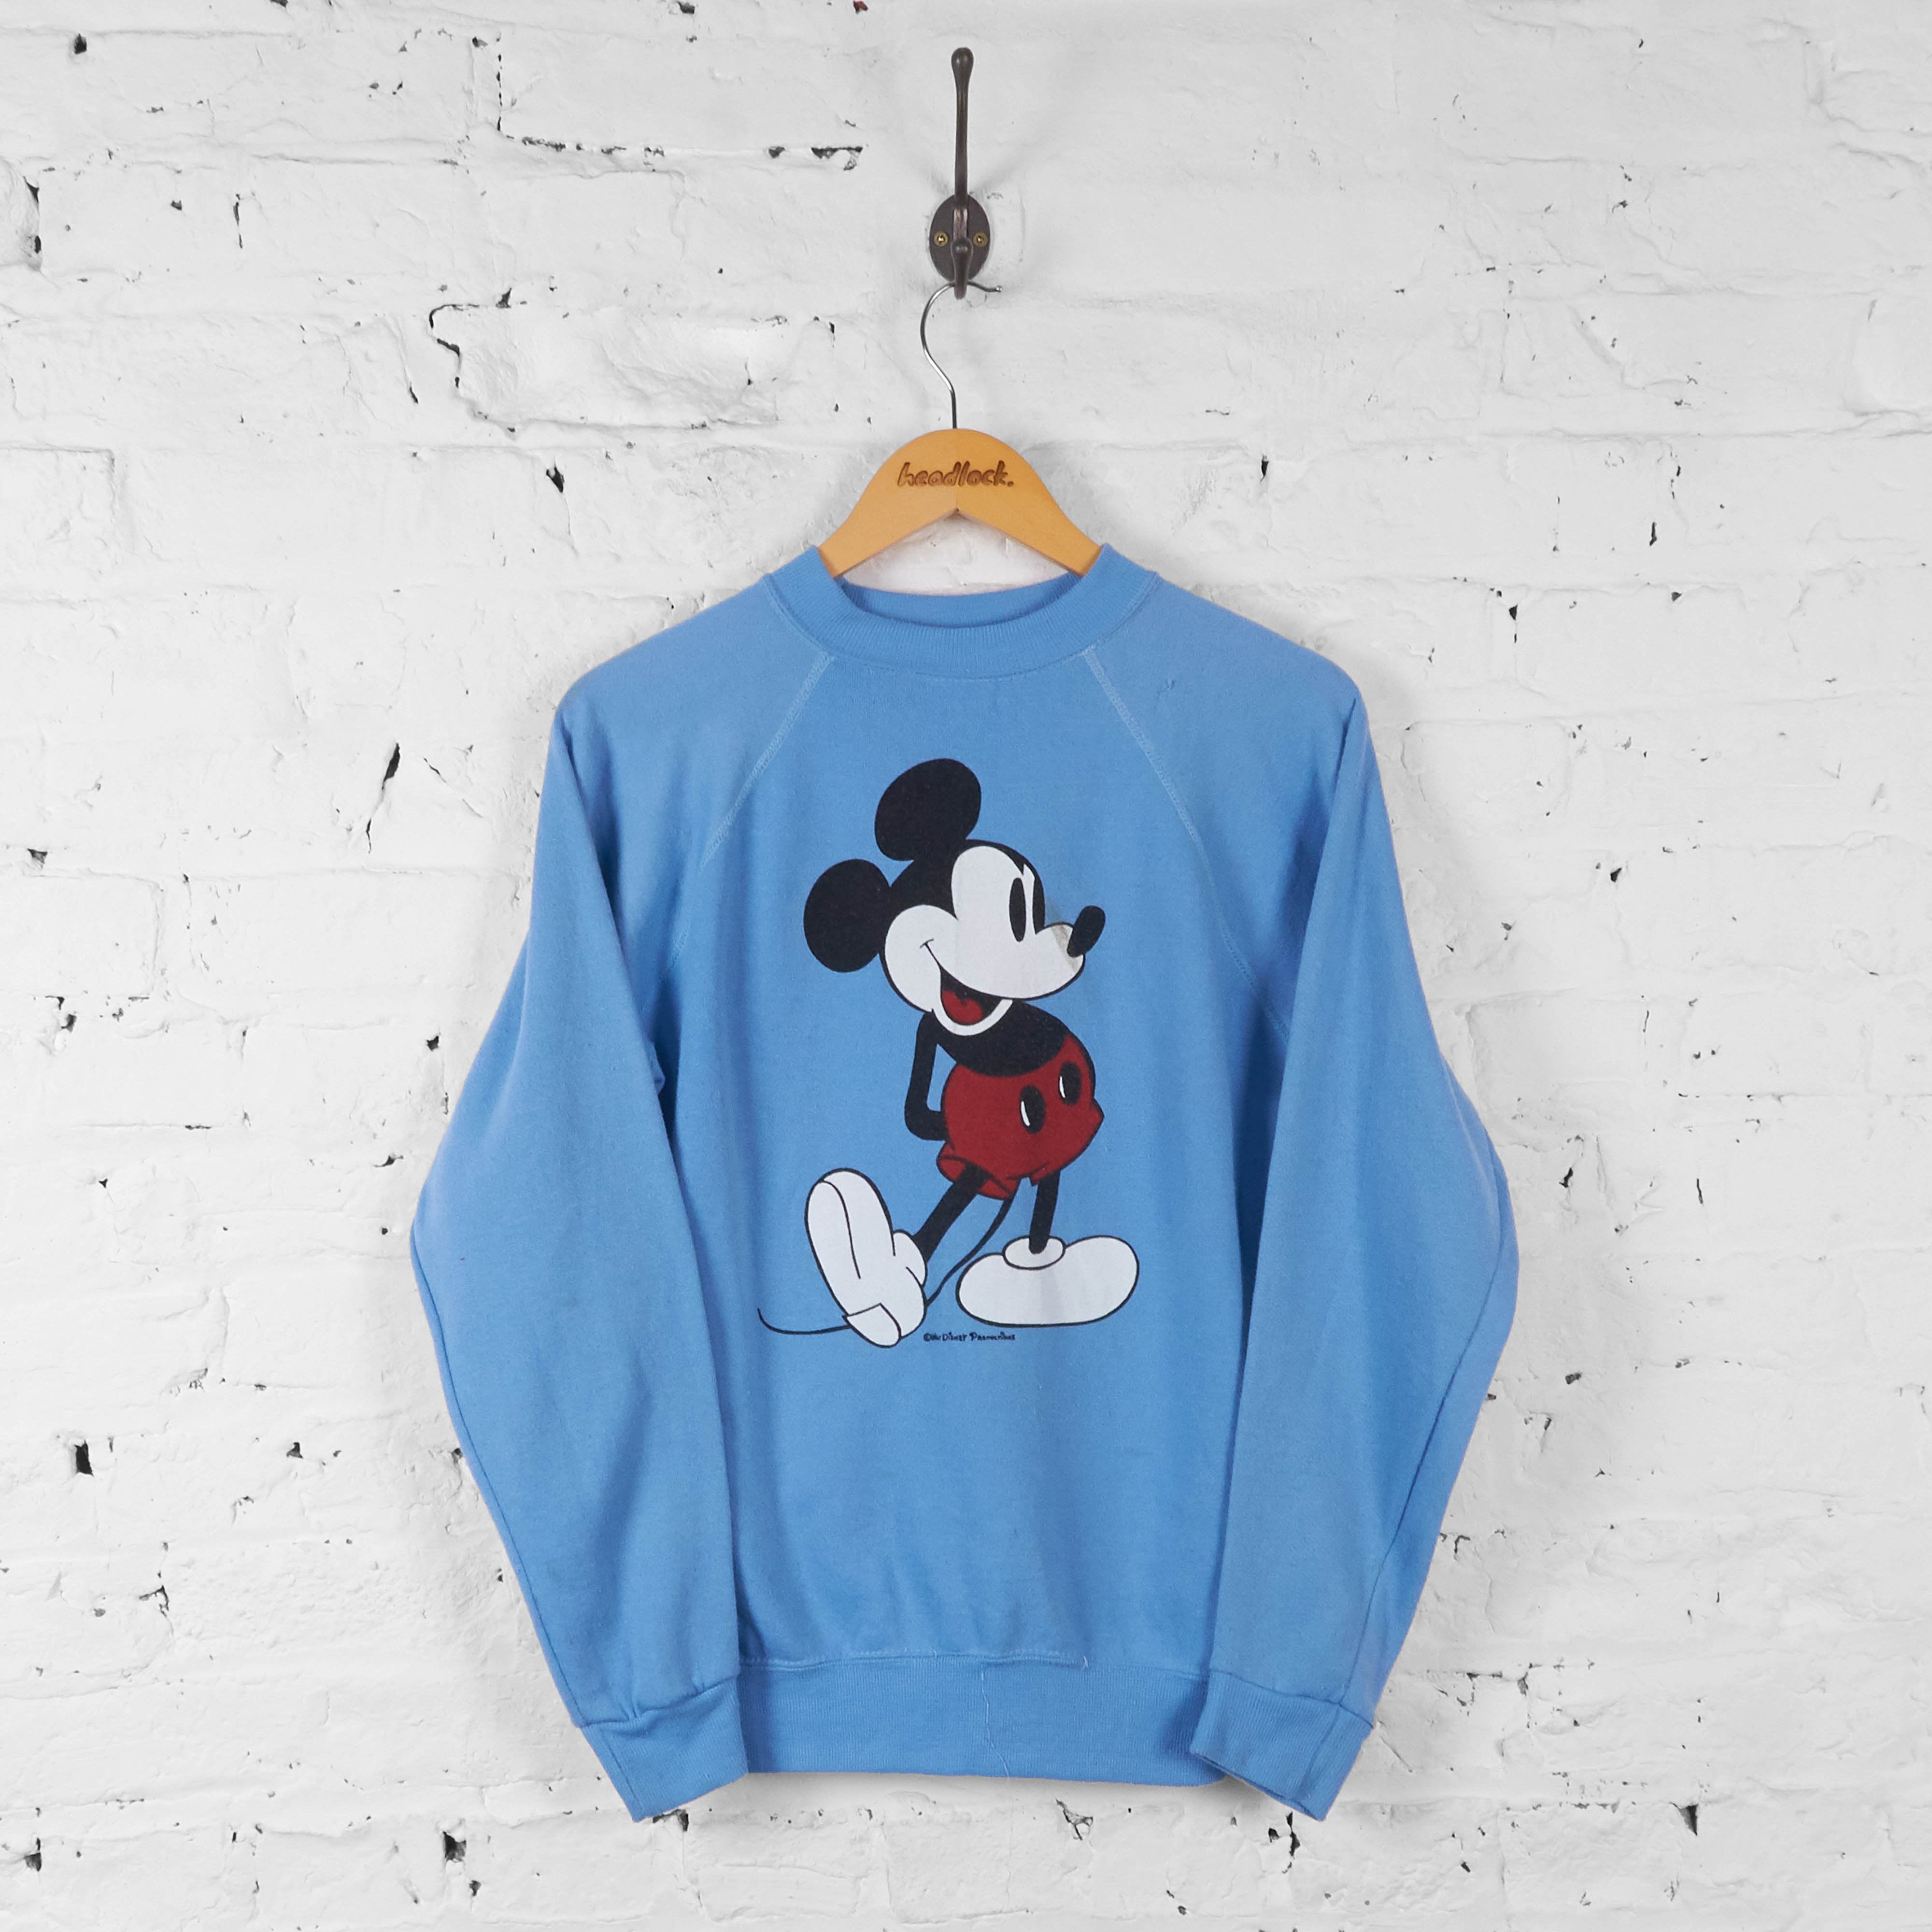 NWOT Blue 4T Mickey Mouse Disney Sweater Sweatshirt New